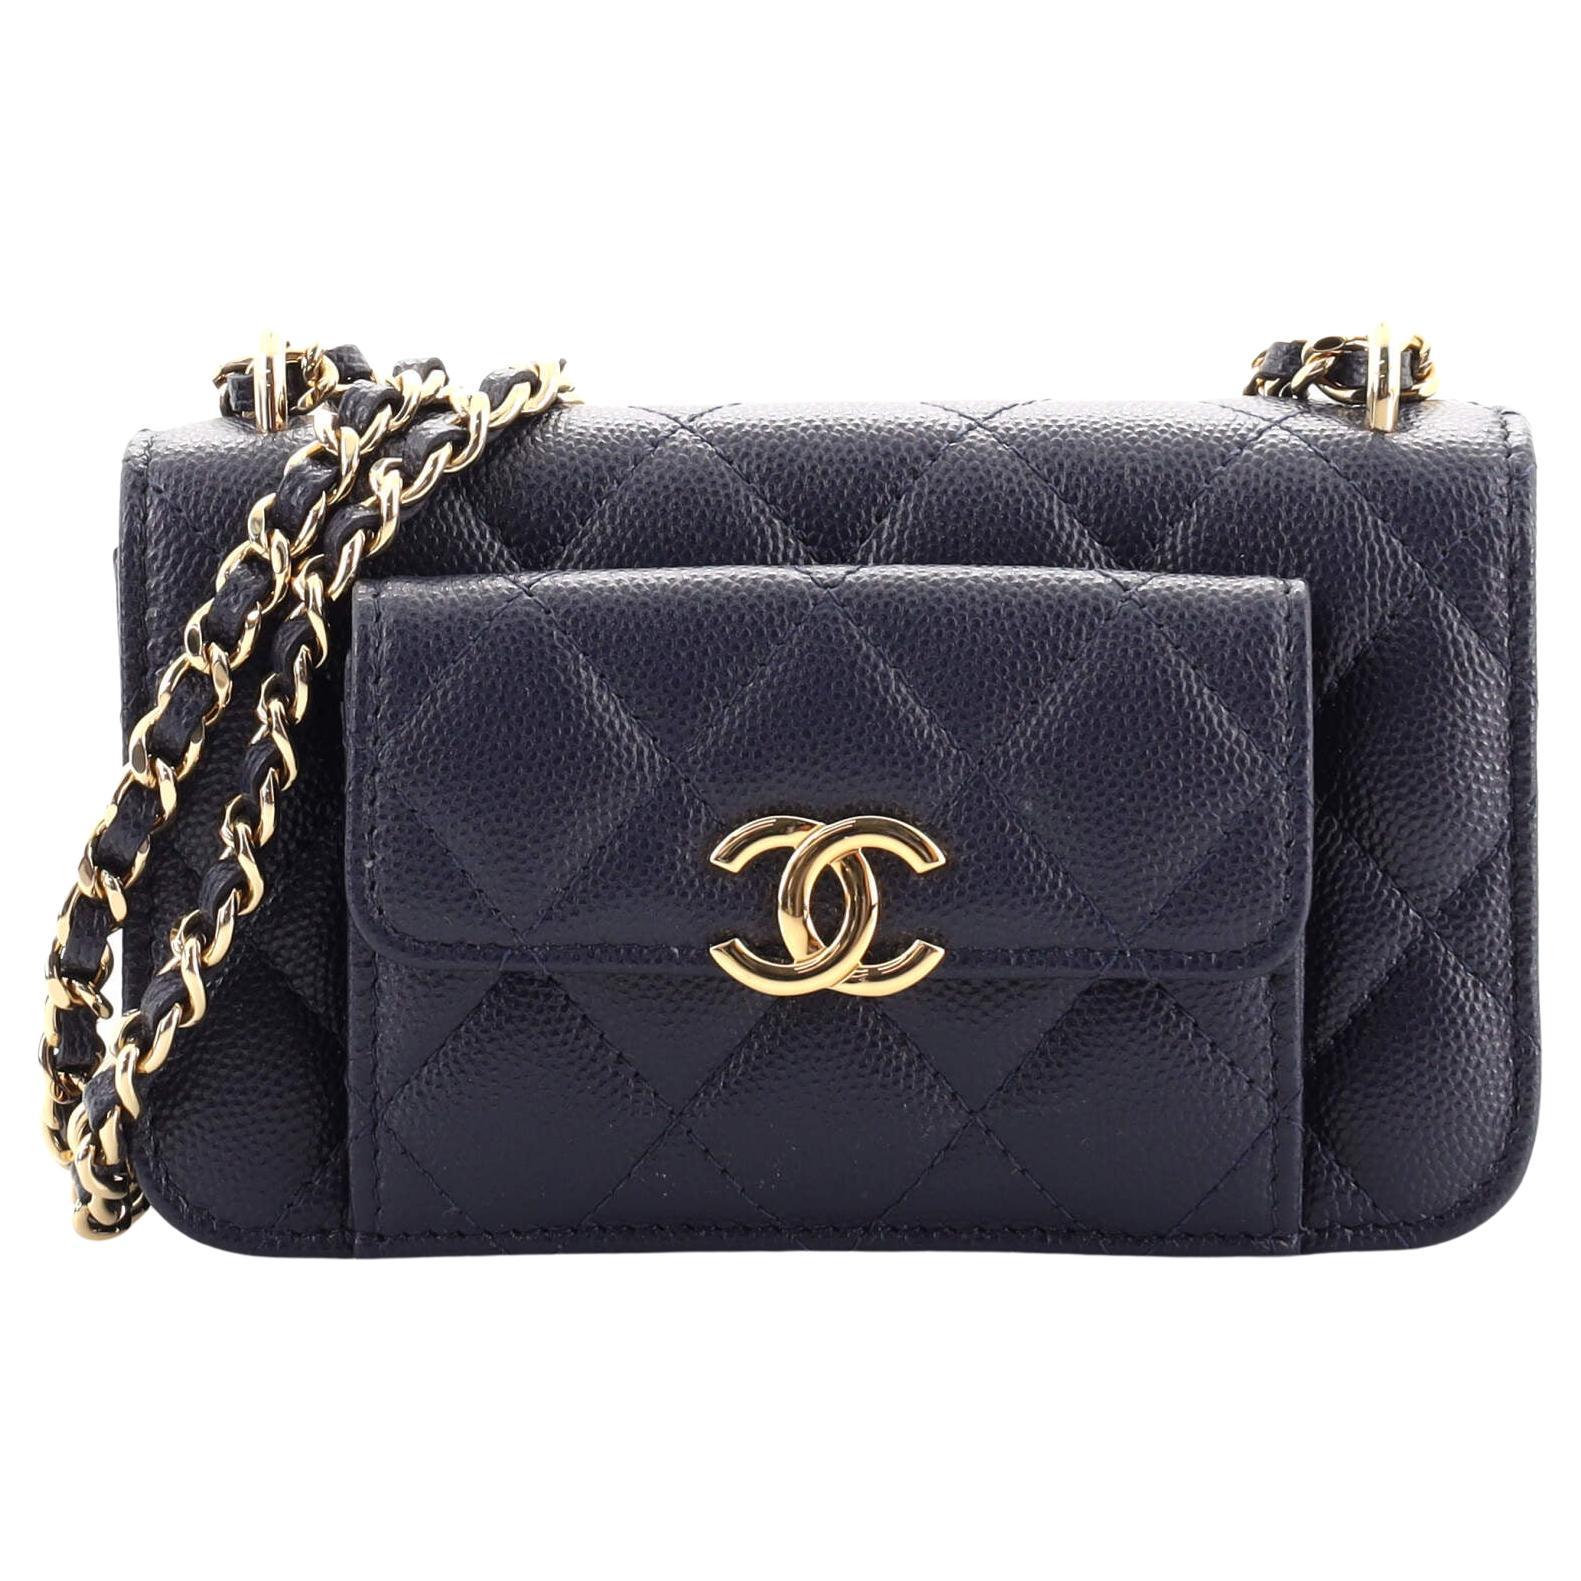 The Chanel Side-Packs Bag Will Set The New Trend, Bragmybag